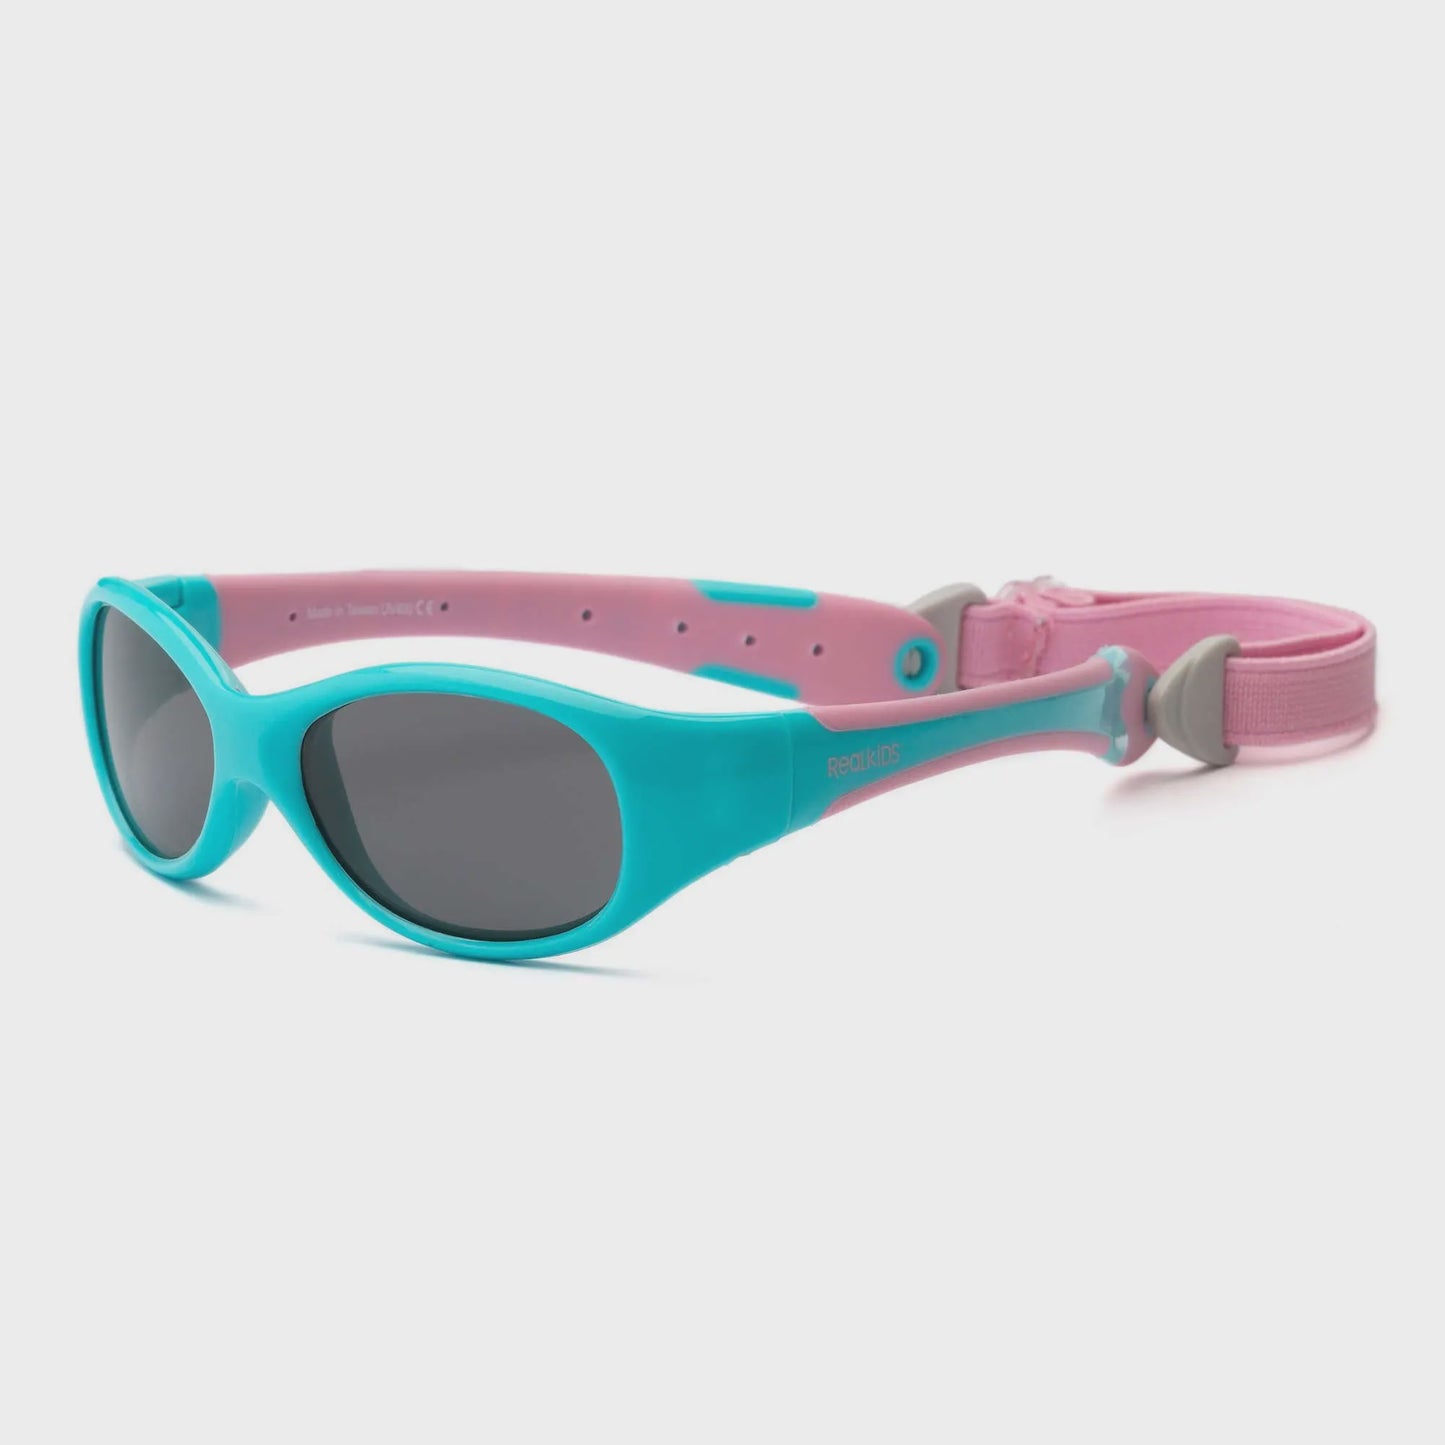 Aqua Explorer Flexible Frame Sunglasses